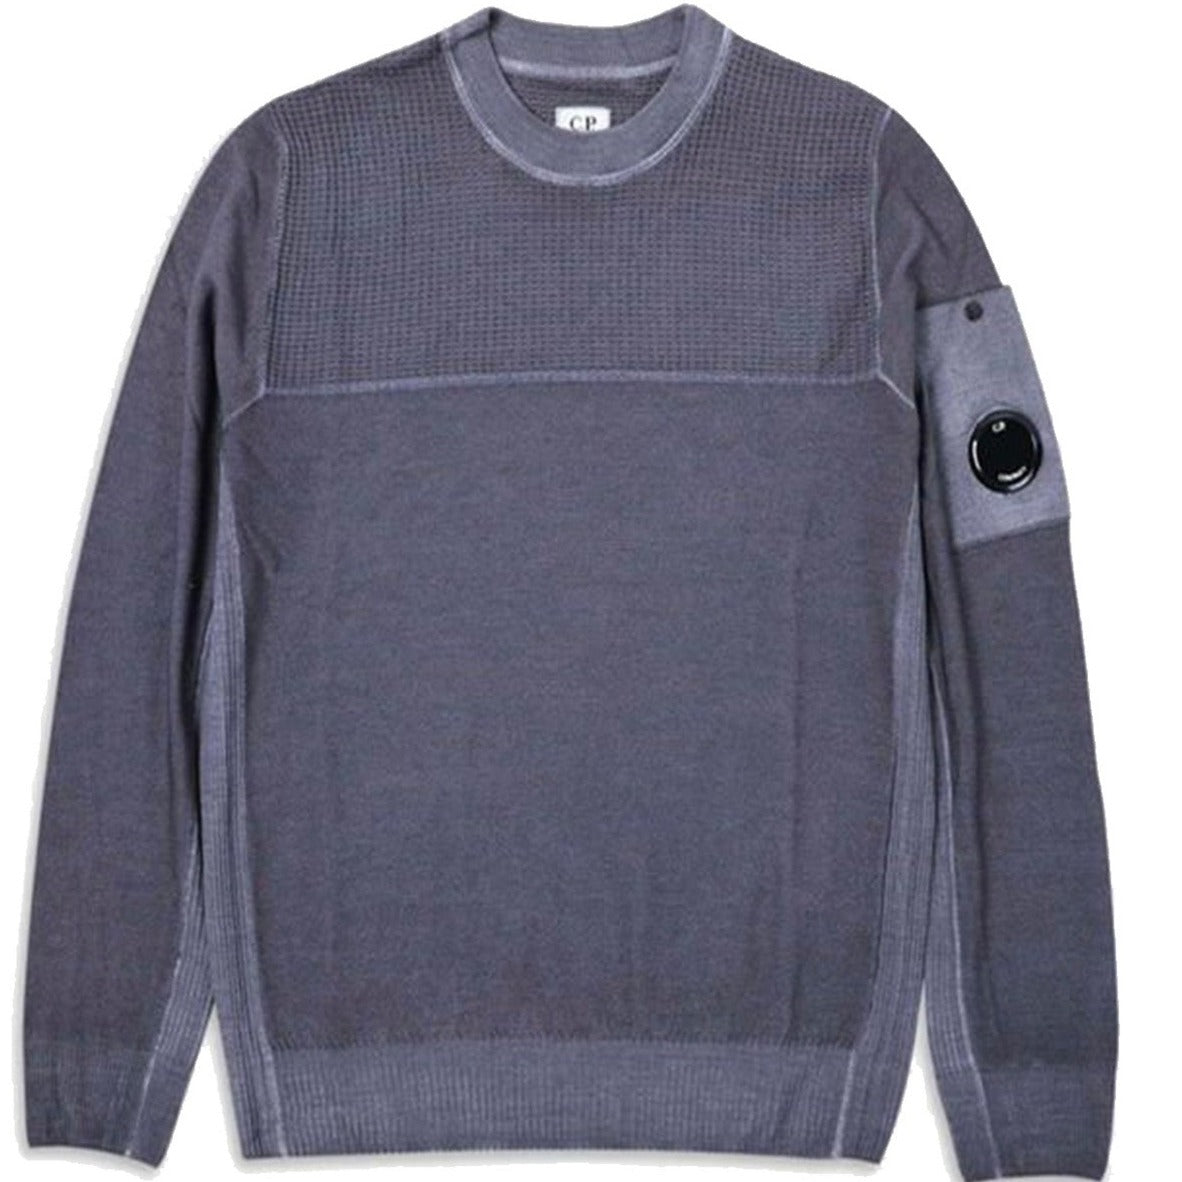 C.P. Company Lens Knitted Sweatshirt - DANYOUNGUK